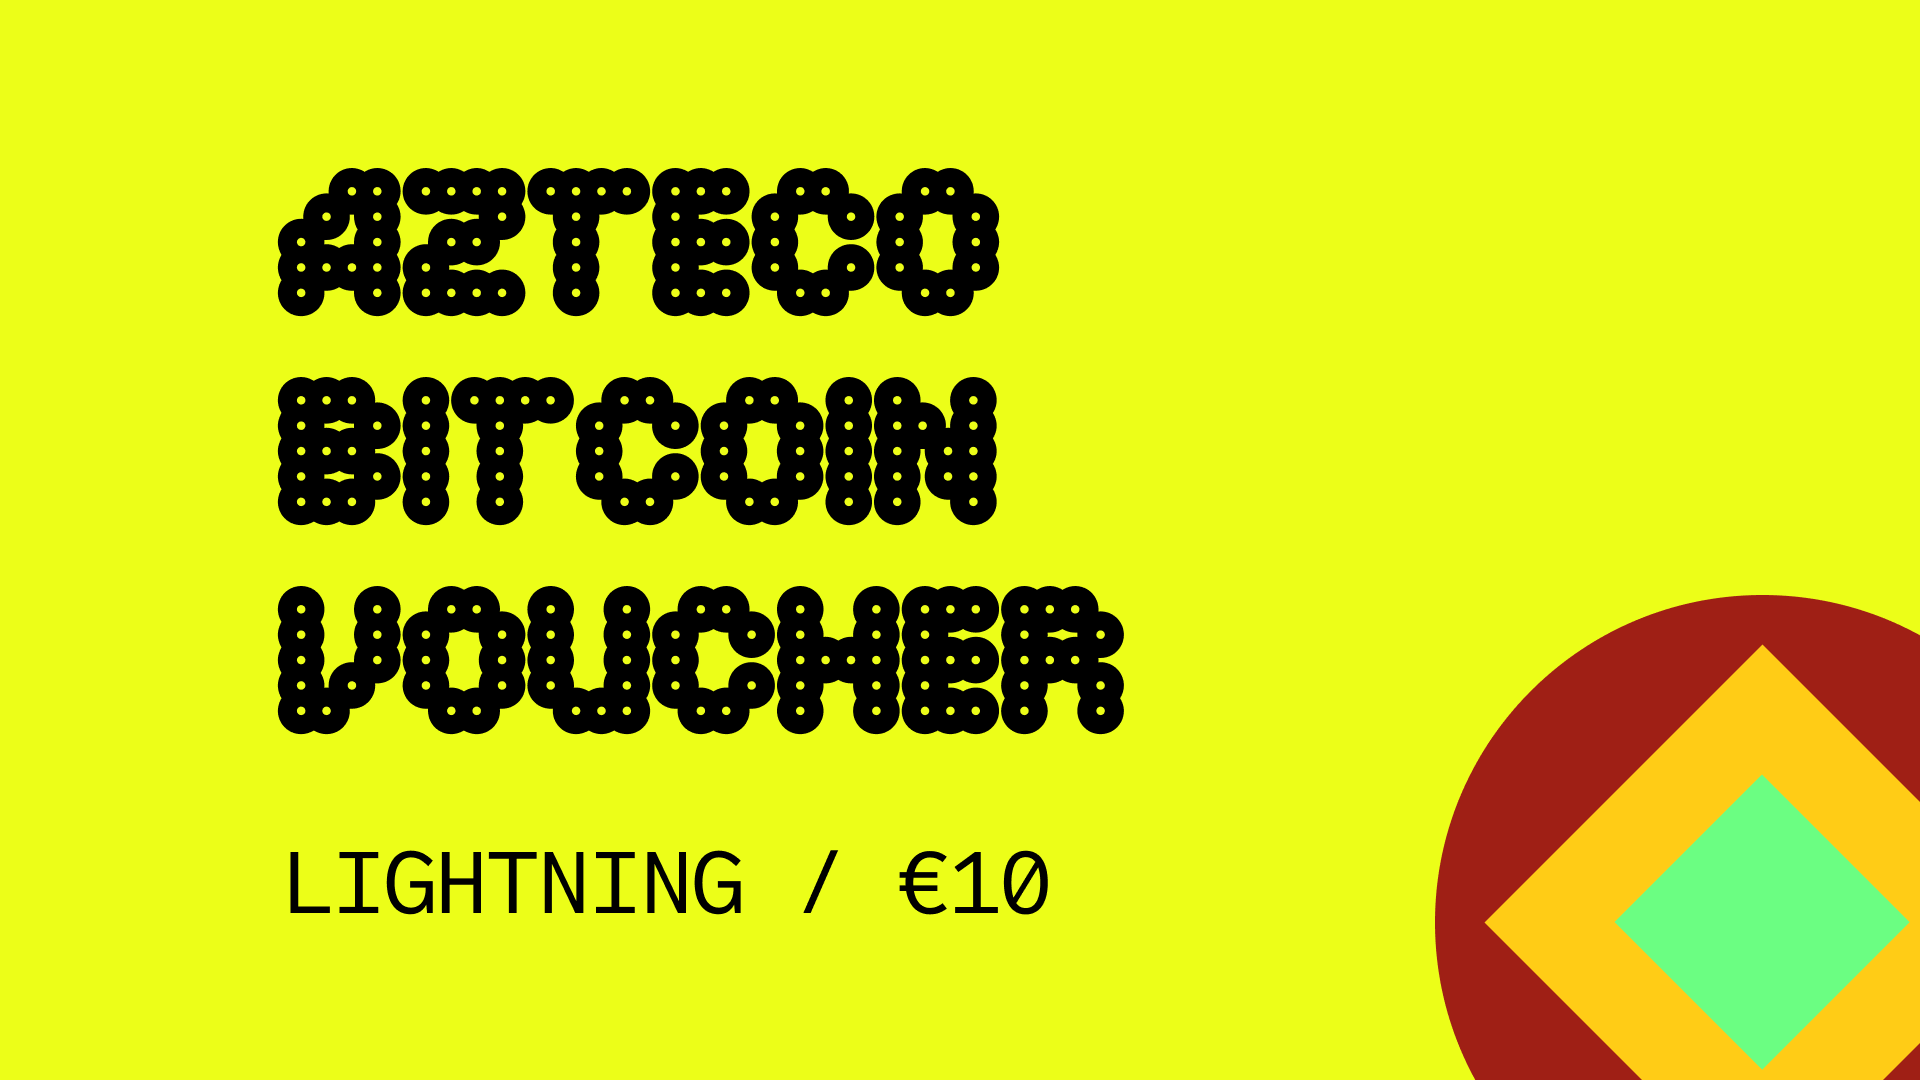 Azteco Bitcoin Lighting €10 Voucher, $11.3